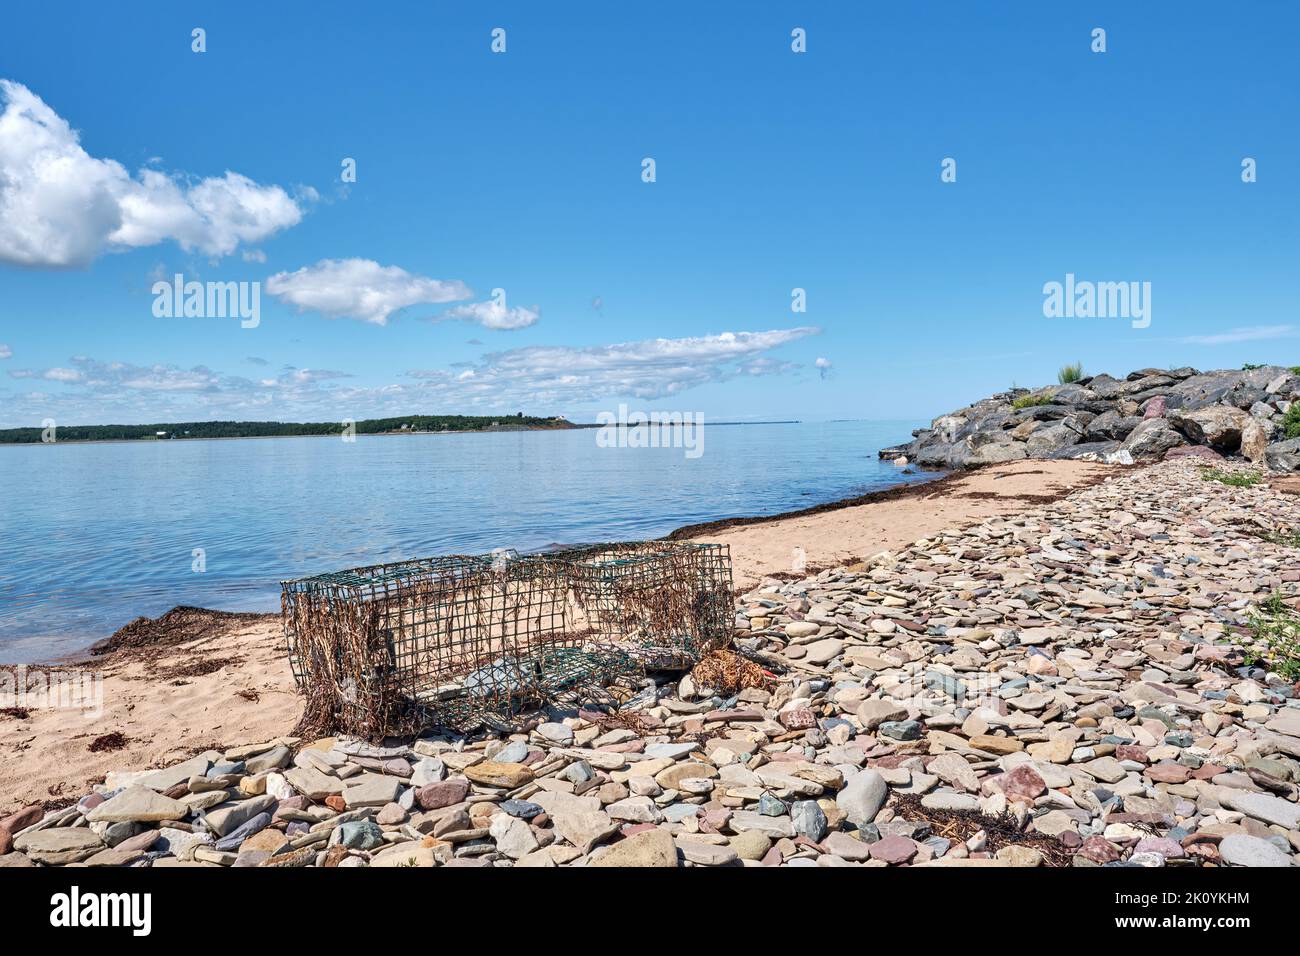 Damaged lobster trap washed up on Big Island Beach Nova Scotia. Stock Photo